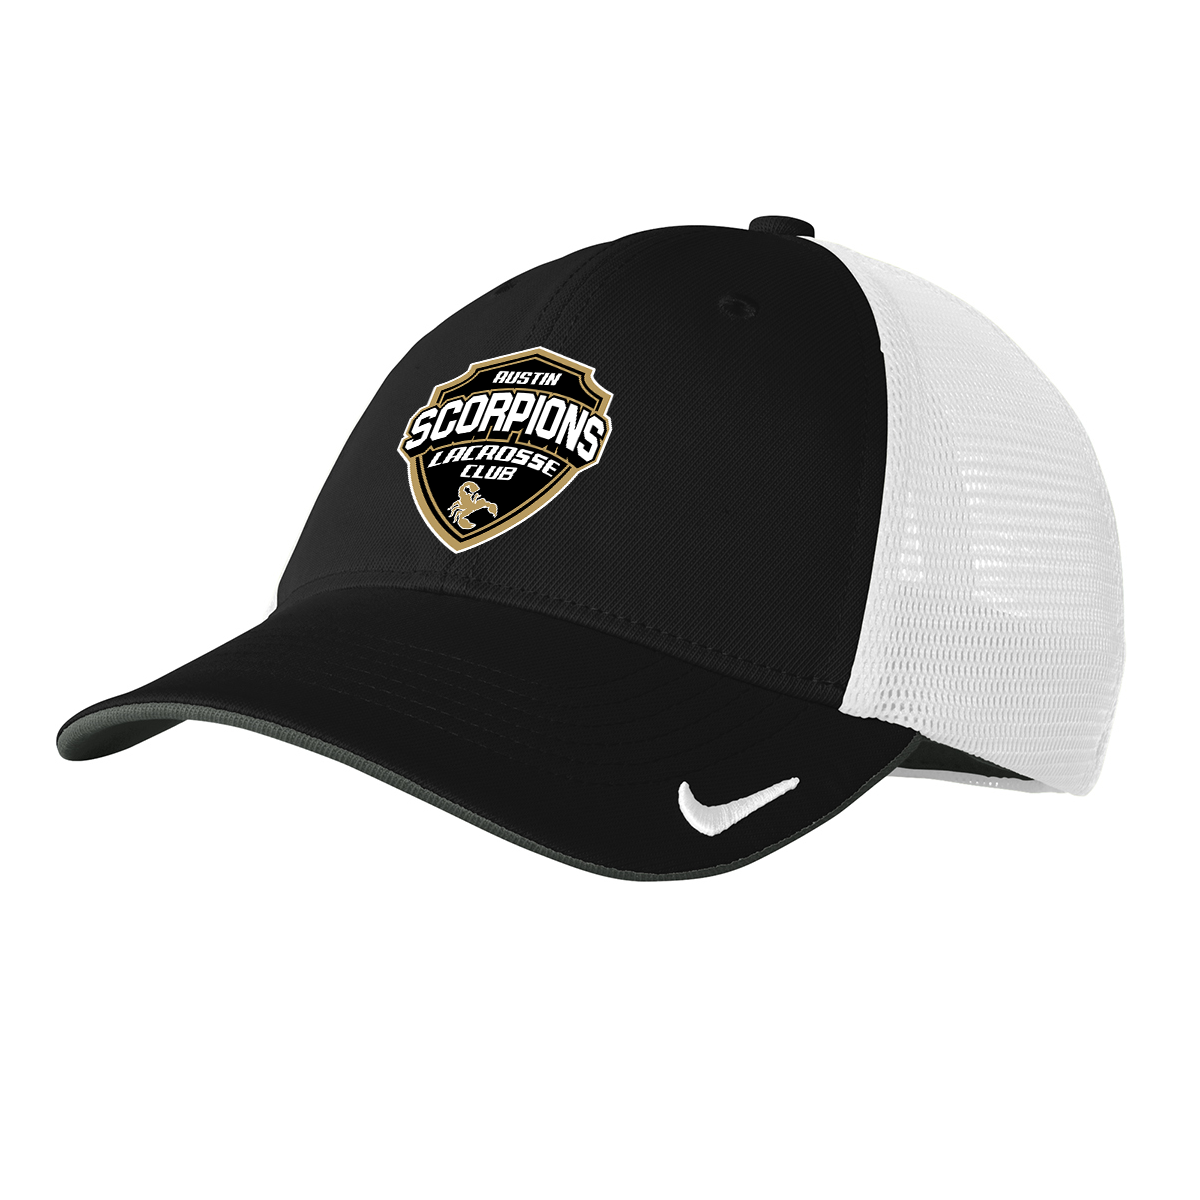 Austin Scorpions Lacrosse Club Nike Dri-FIT Mesh Cap